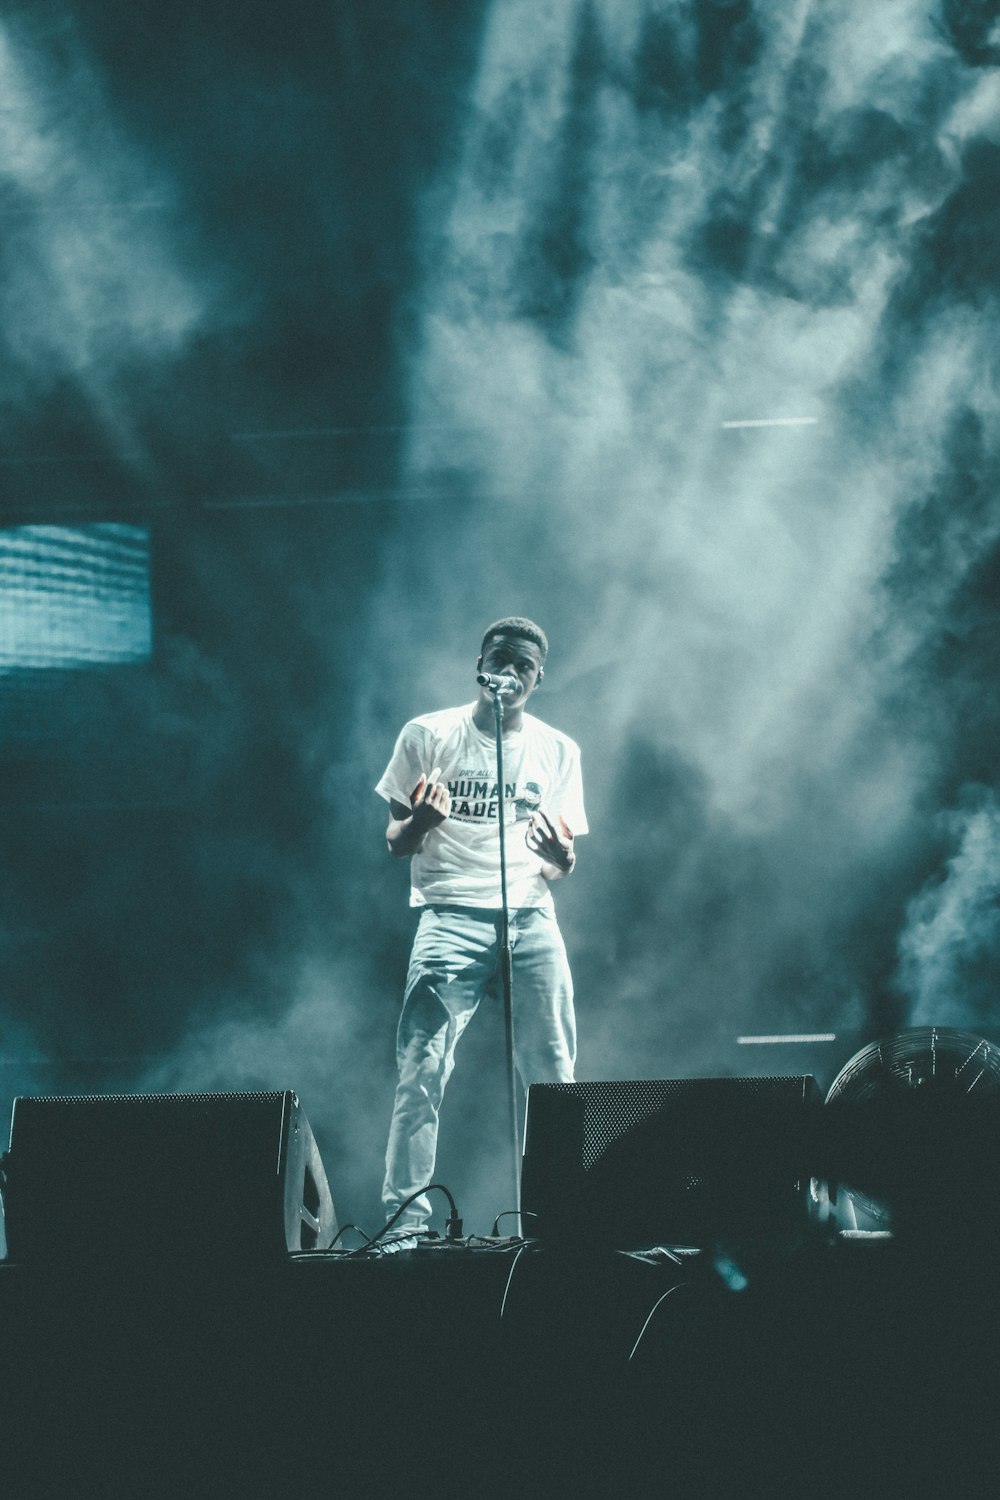 man in white shirt singing on stage